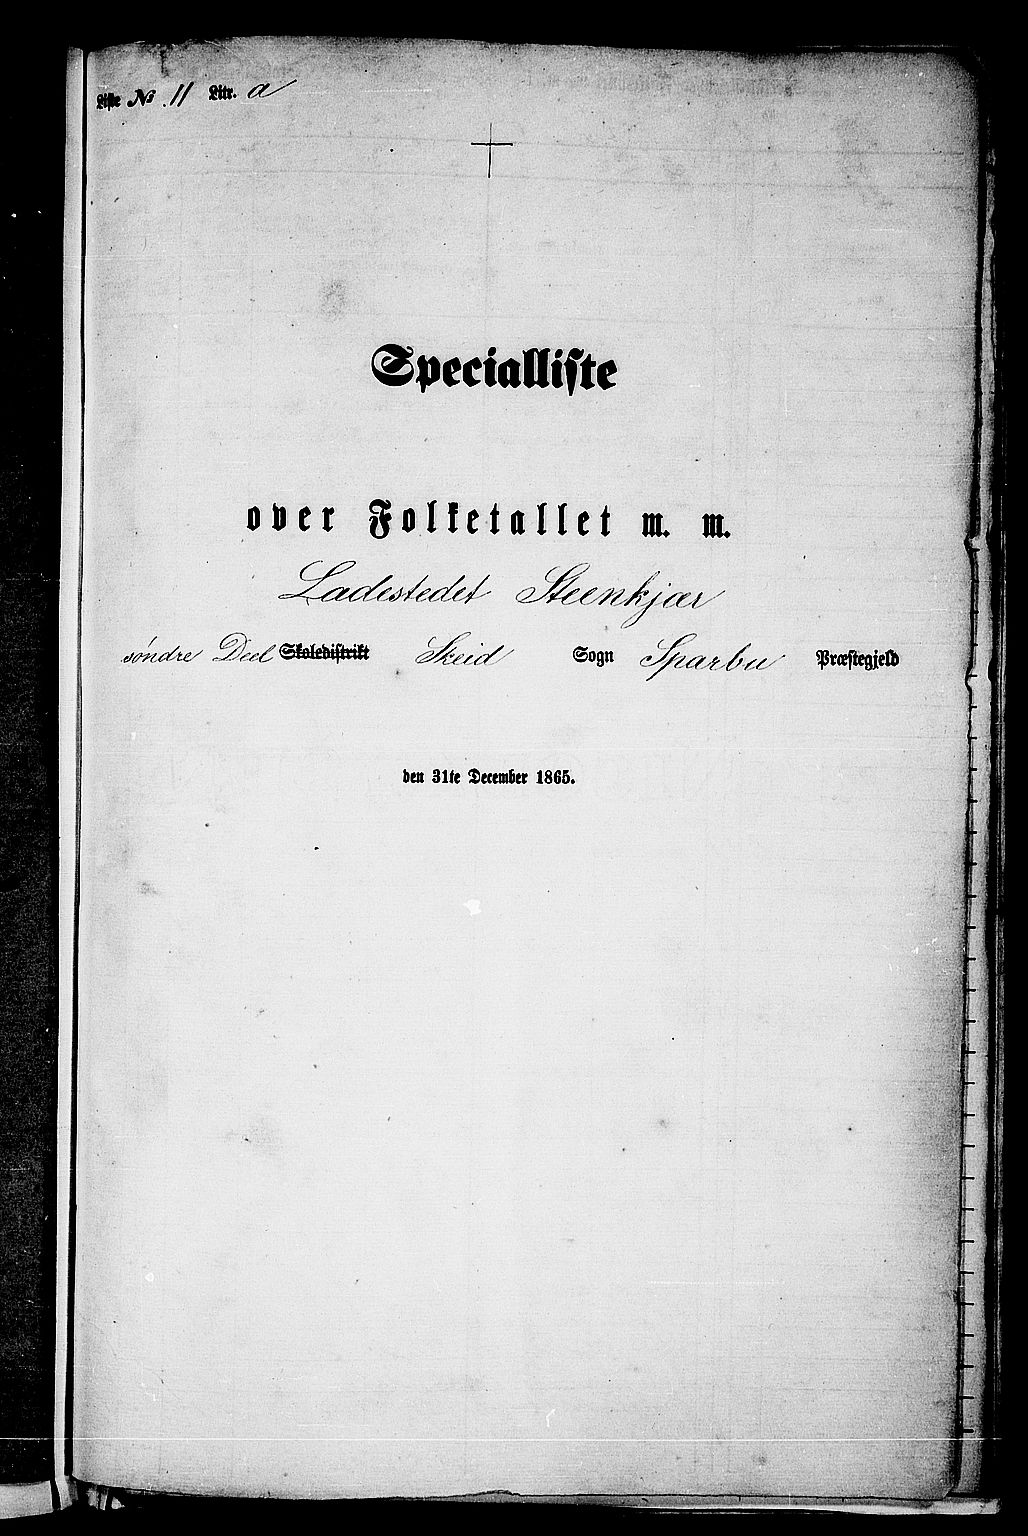 RA, Folketelling 1865 for 1731P Sparbu prestegjeld, 1865, s. 221